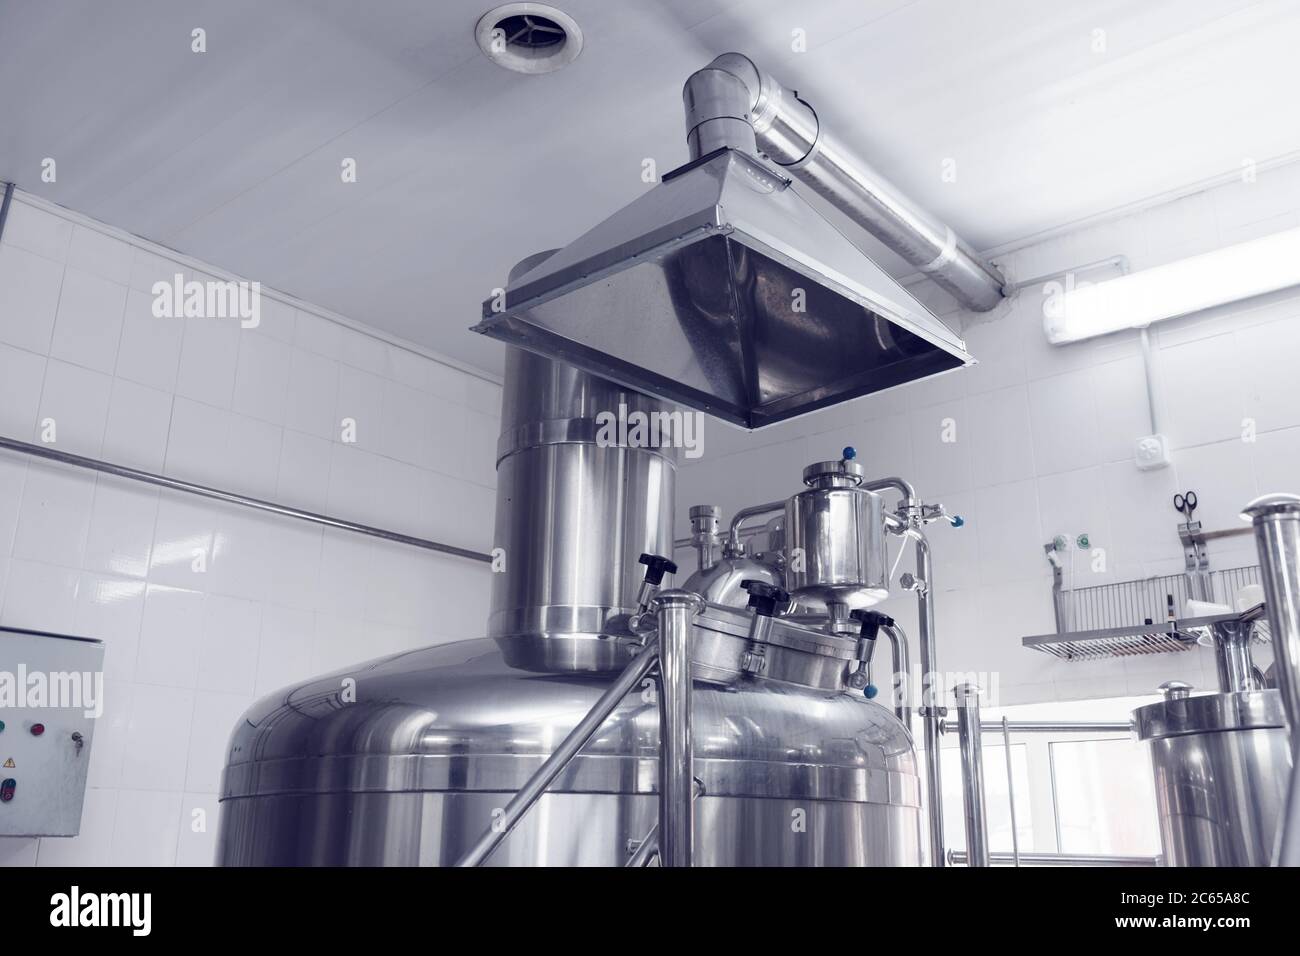 Sistema di ventilazione in una fabbrica di birra - cappa di aspirazione dell'aria su vasche di birra, tonica Foto Stock